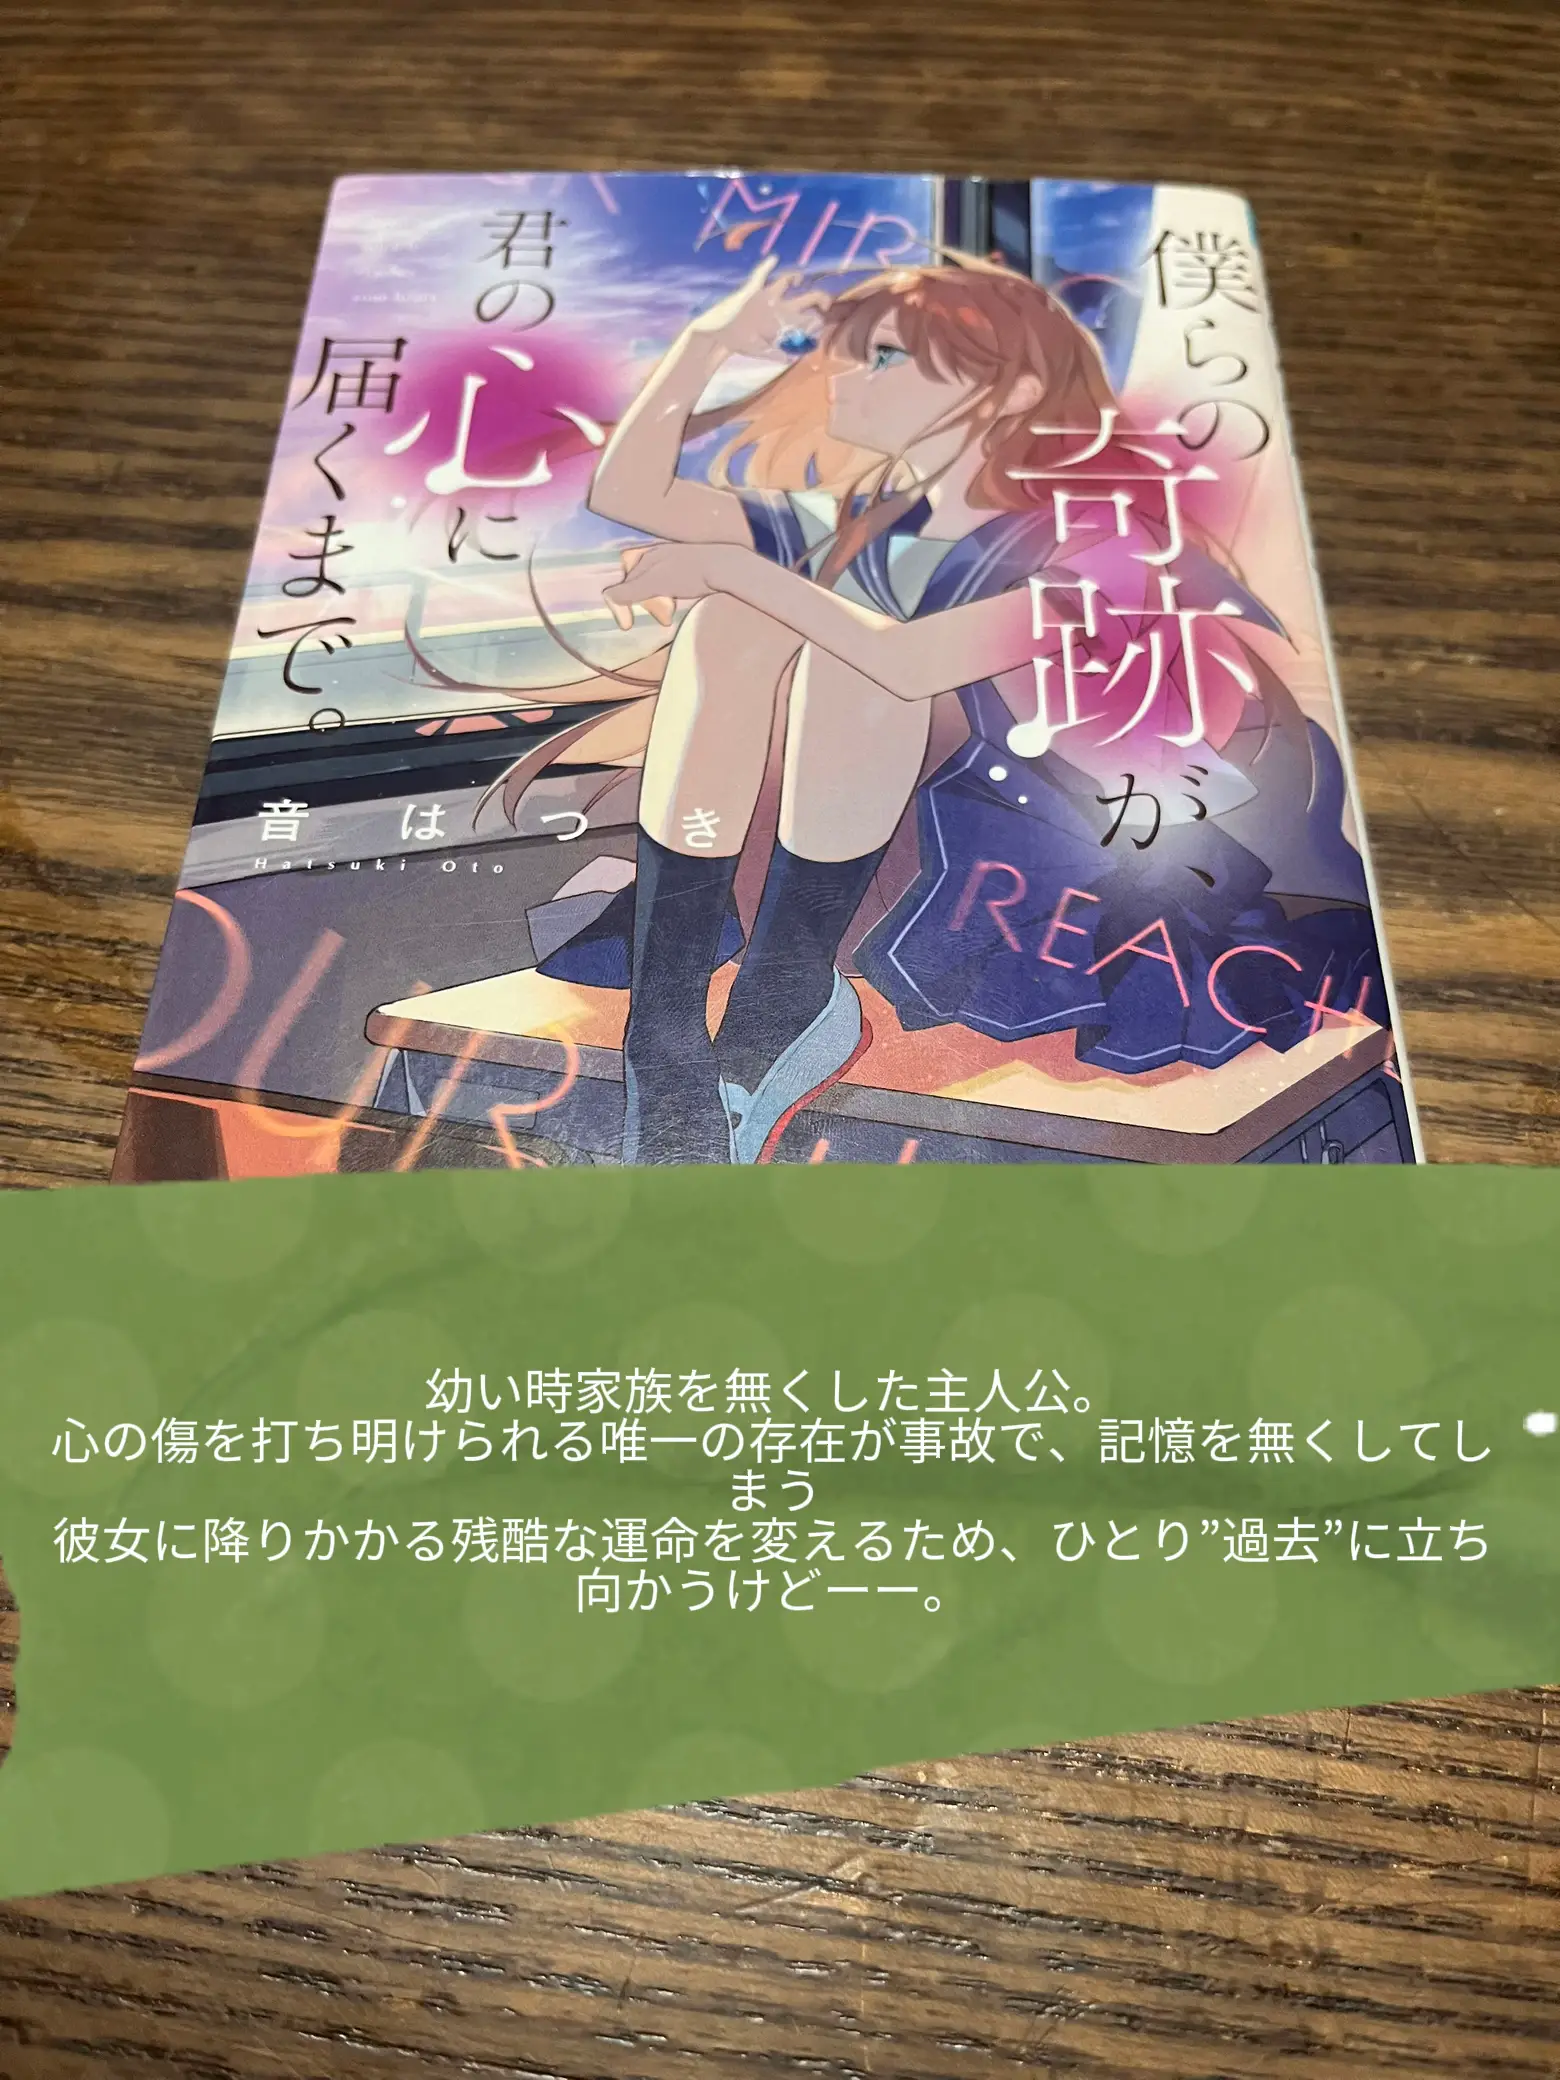 Hooked on This Novel - Lemon8検索